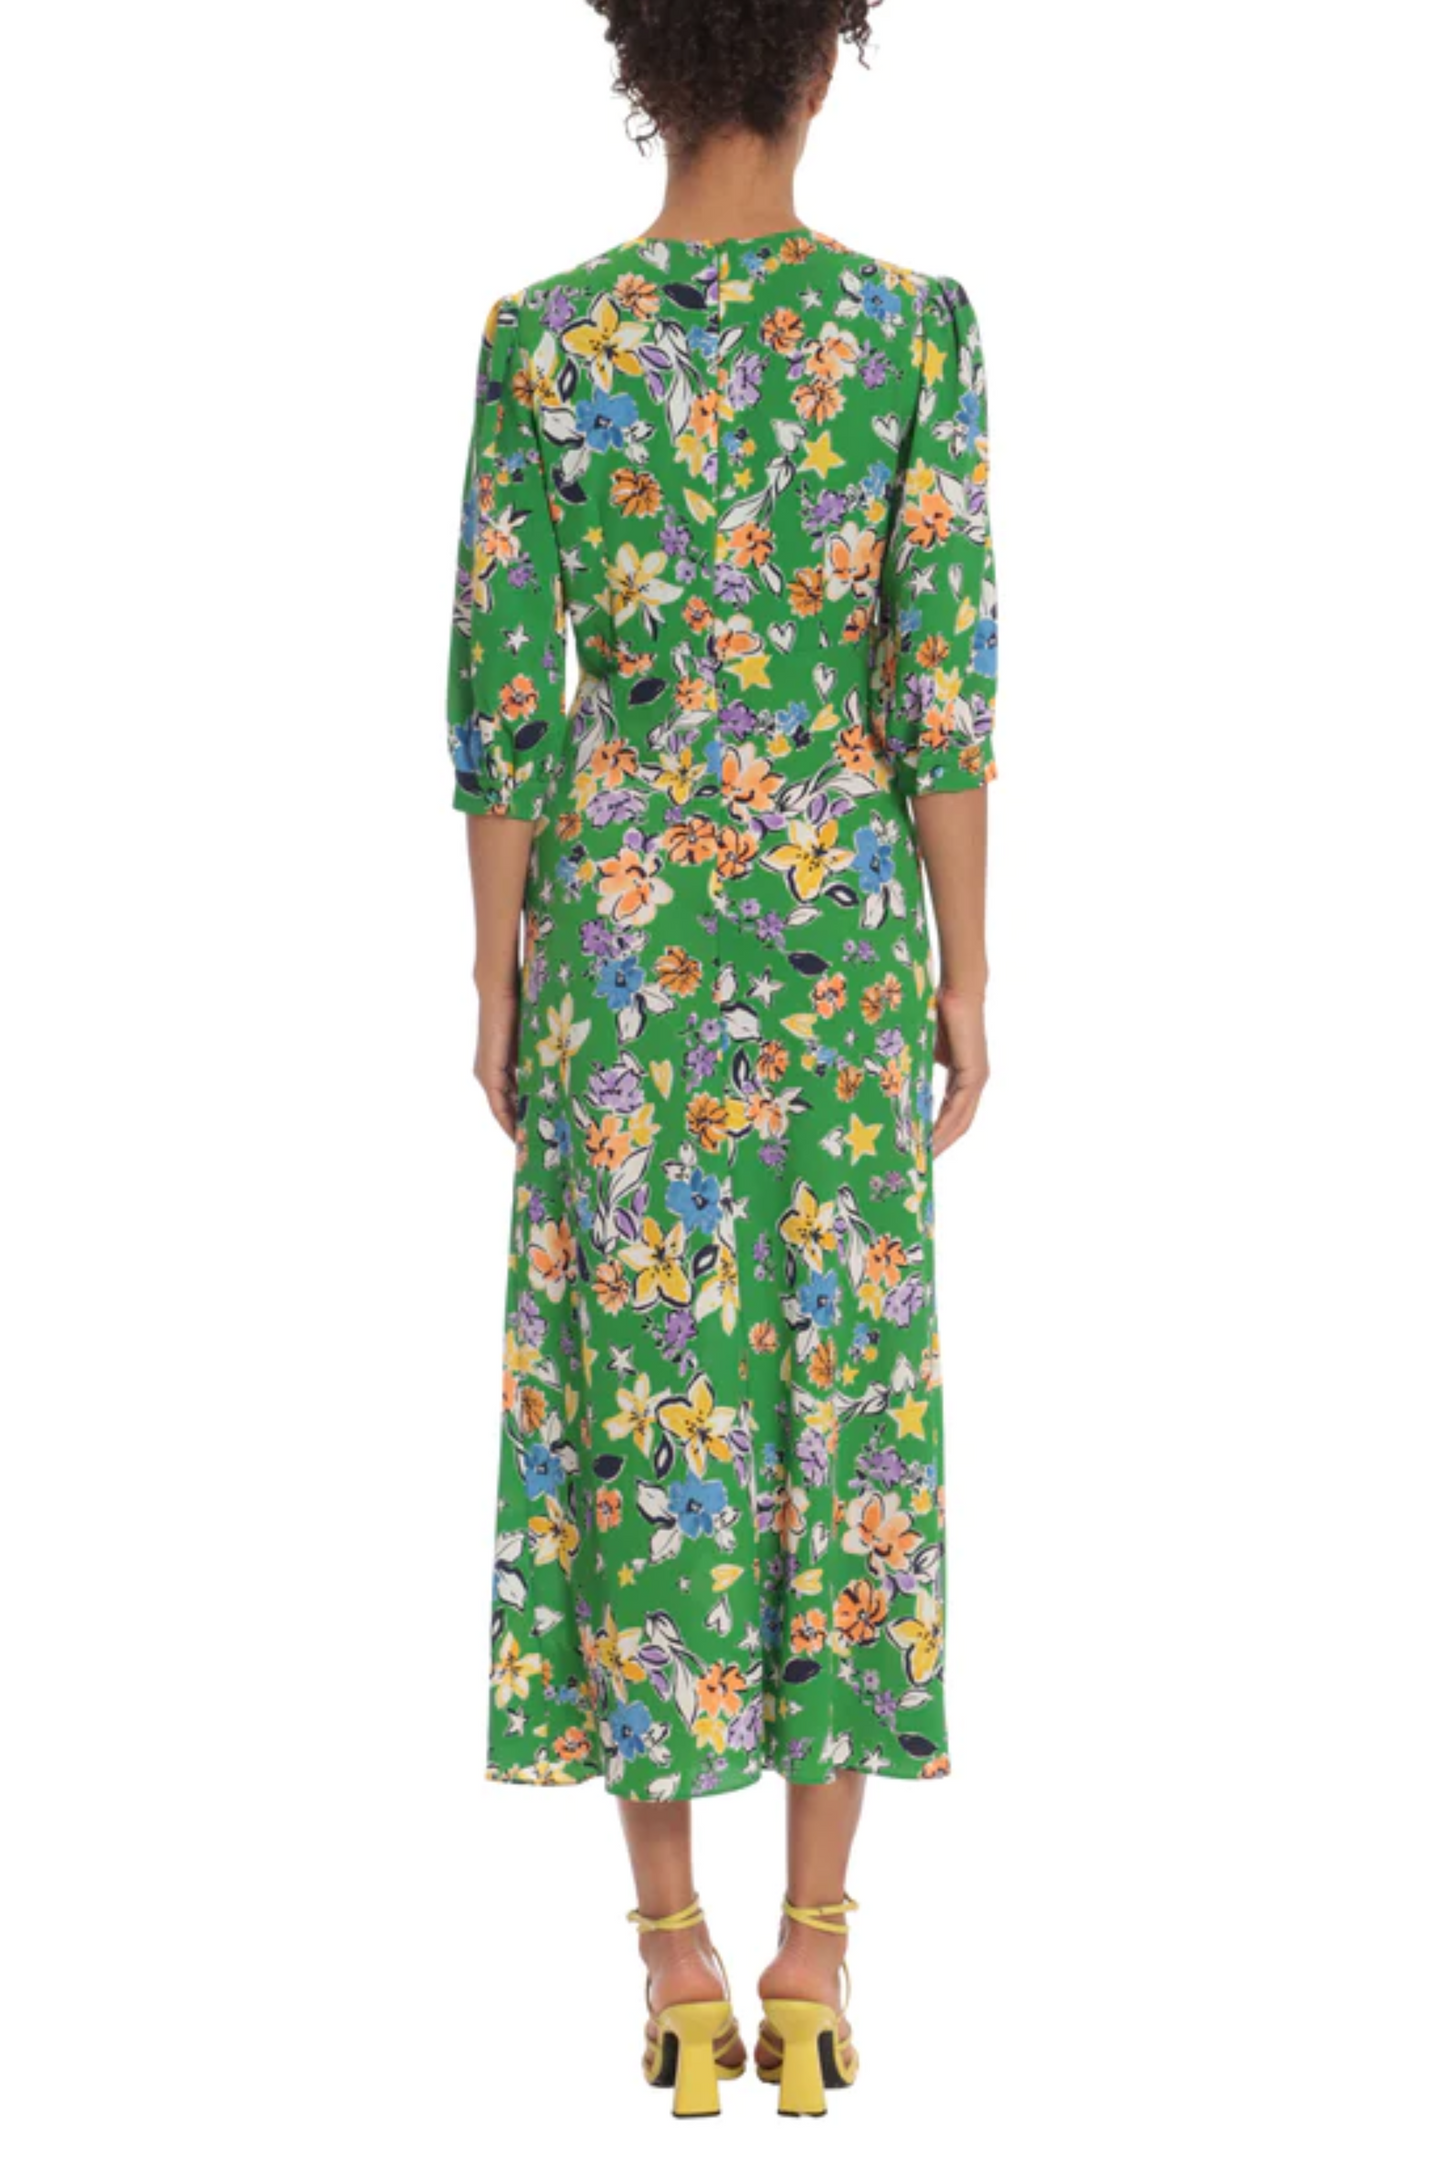 Donna Morgan 3/4 Sleeve Floral Print Empire Dress